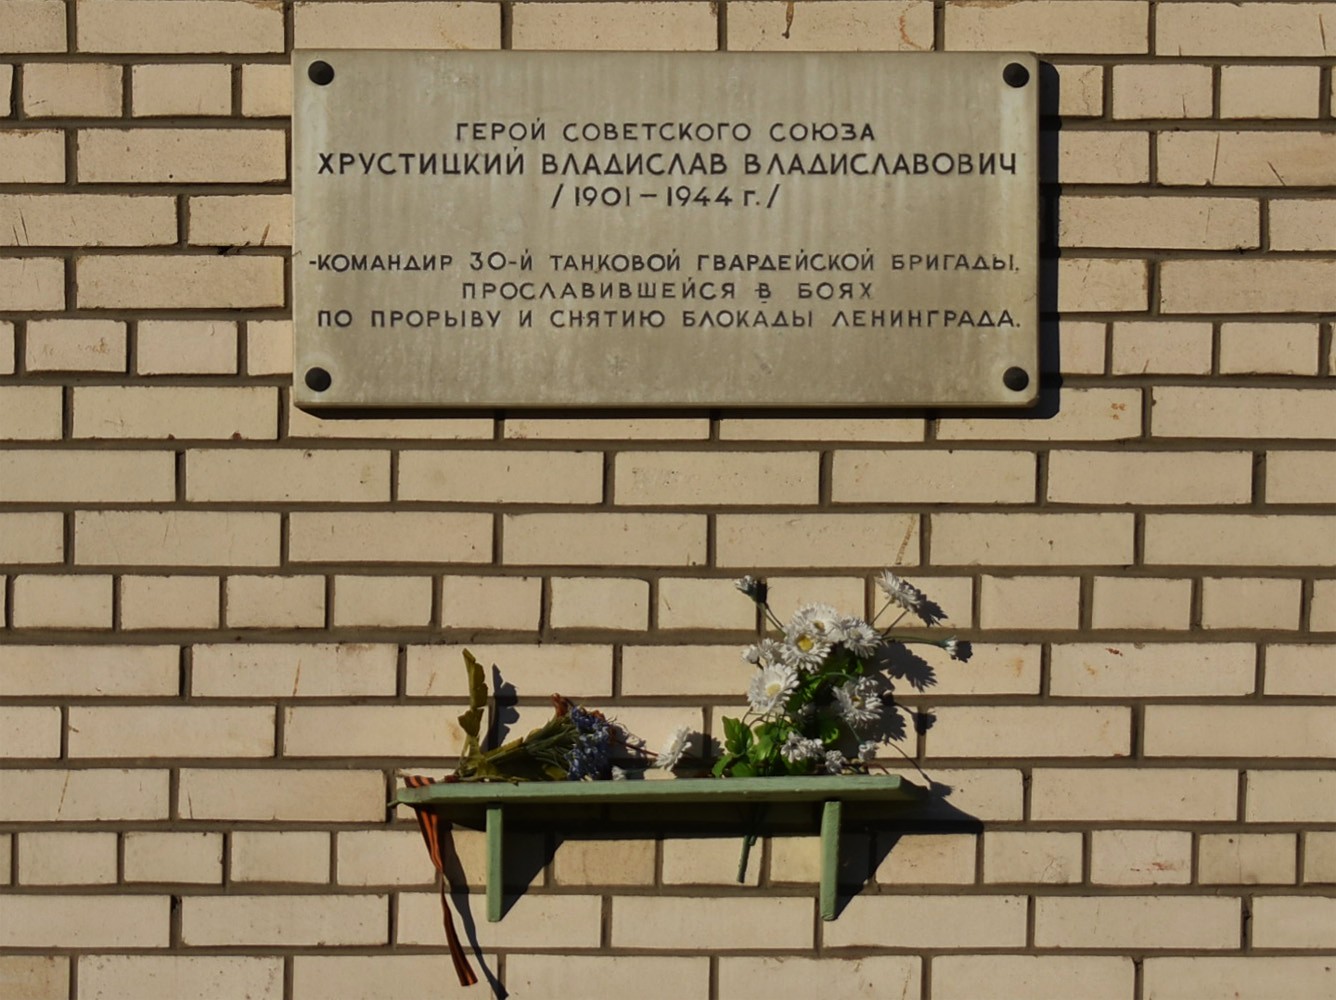 Saint Petersburg, Бульвар Новаторов, 116. Saint Petersburg — Memorial plaques